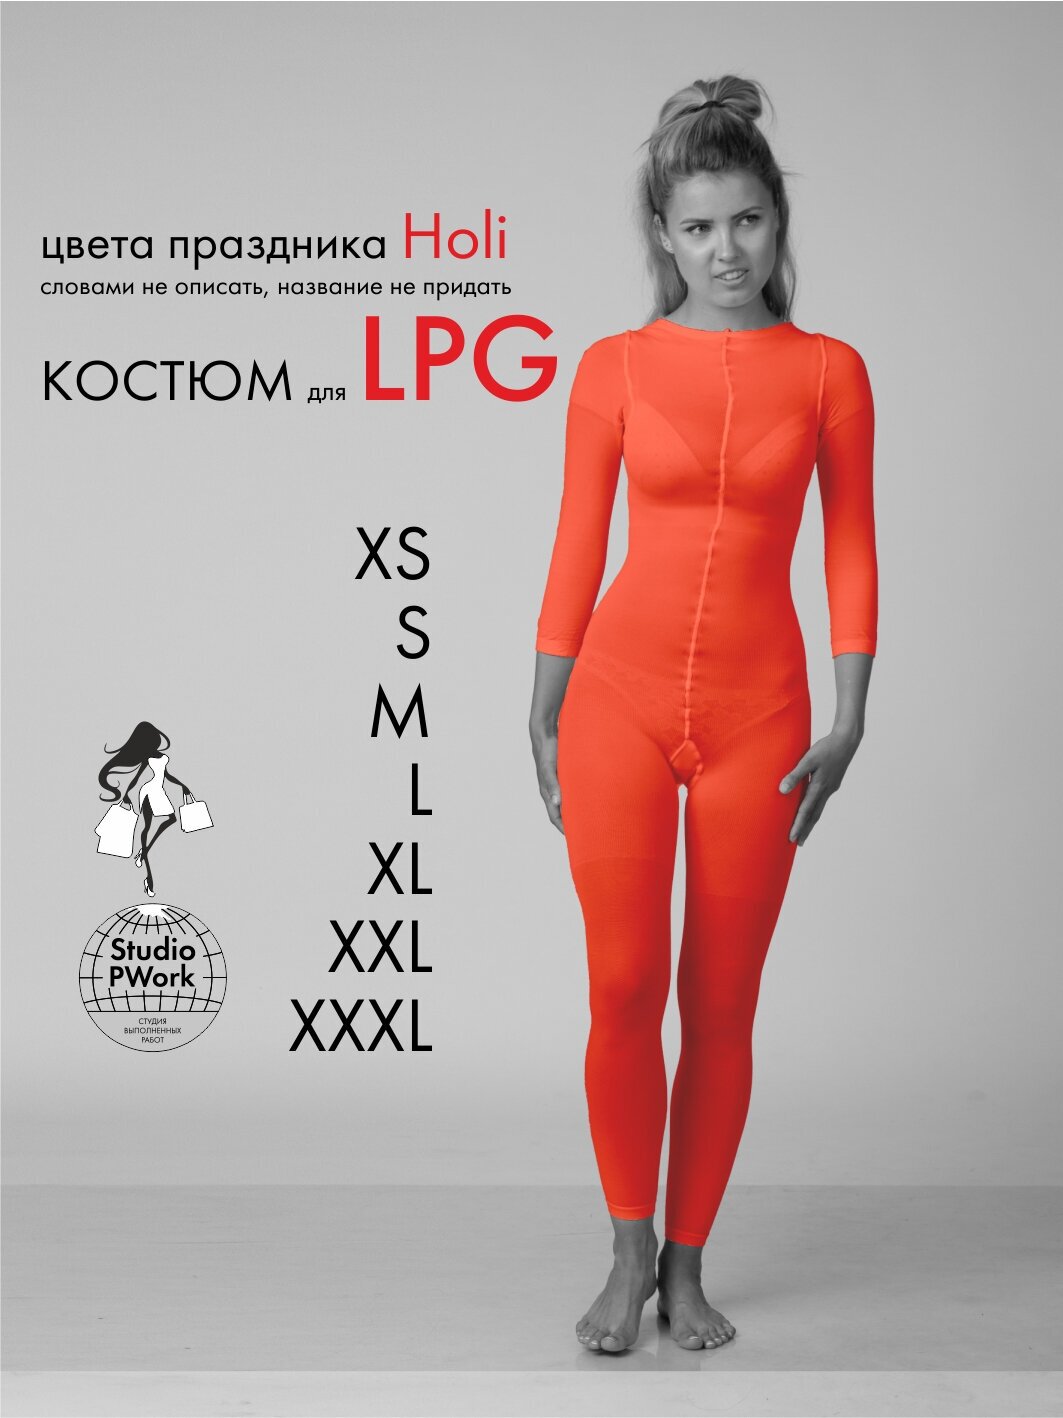 Набор: LPG костюм для LPG массажа, оранжевый, размер XS, 40-44, 120 den LPG комбинезон лпж костюм